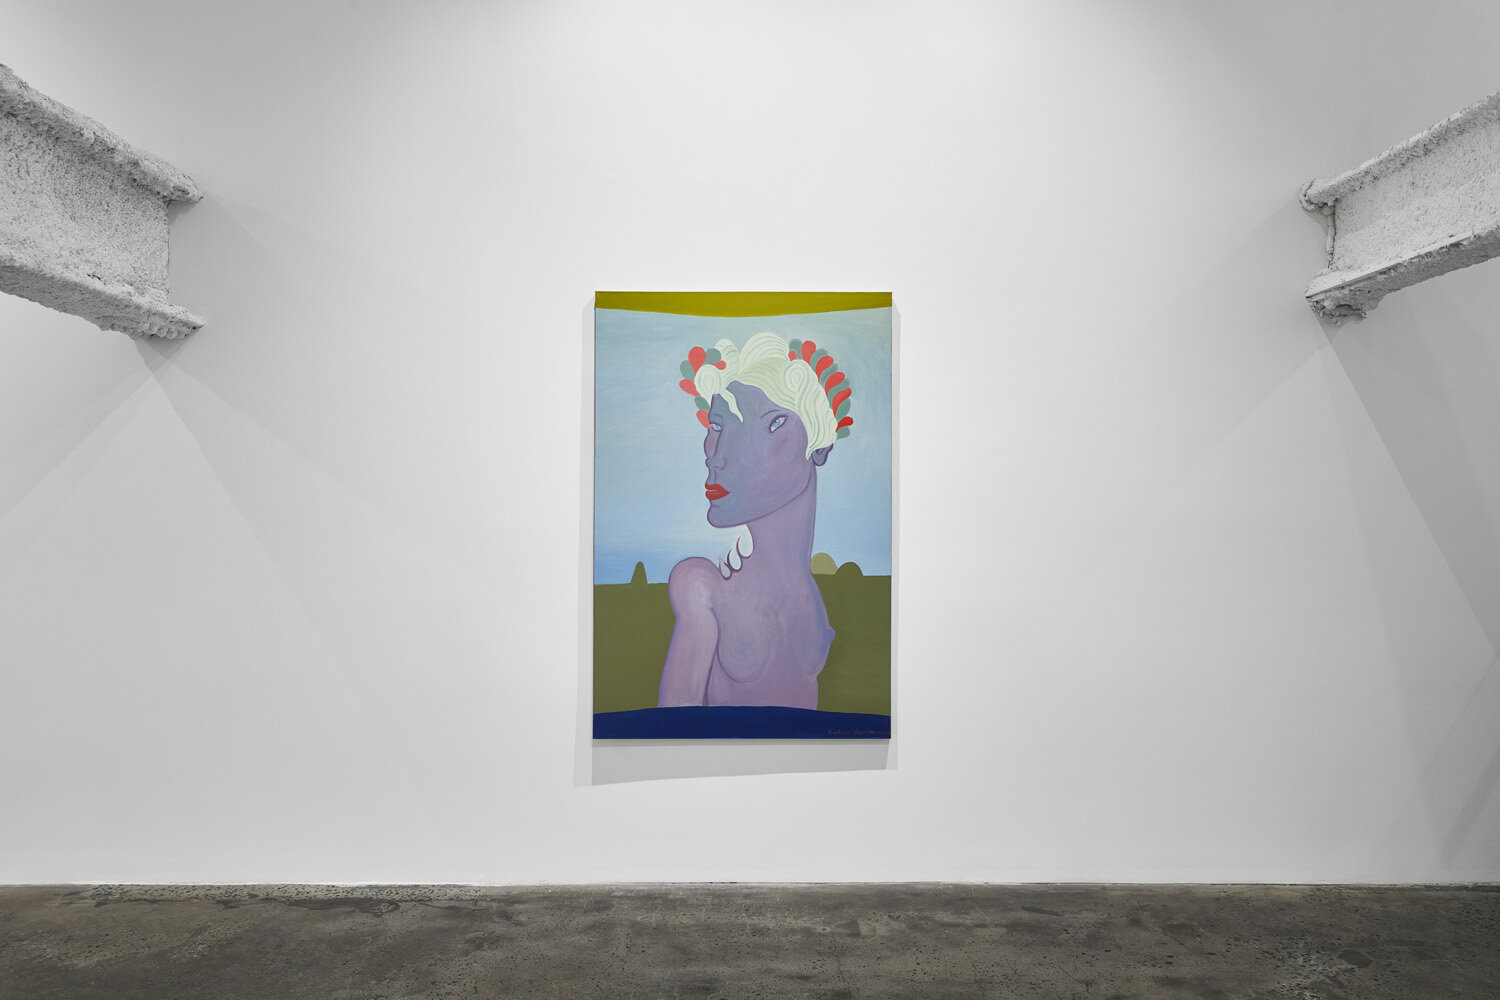   Joline  (2019)  Oil on canvas, 72” x 48”  